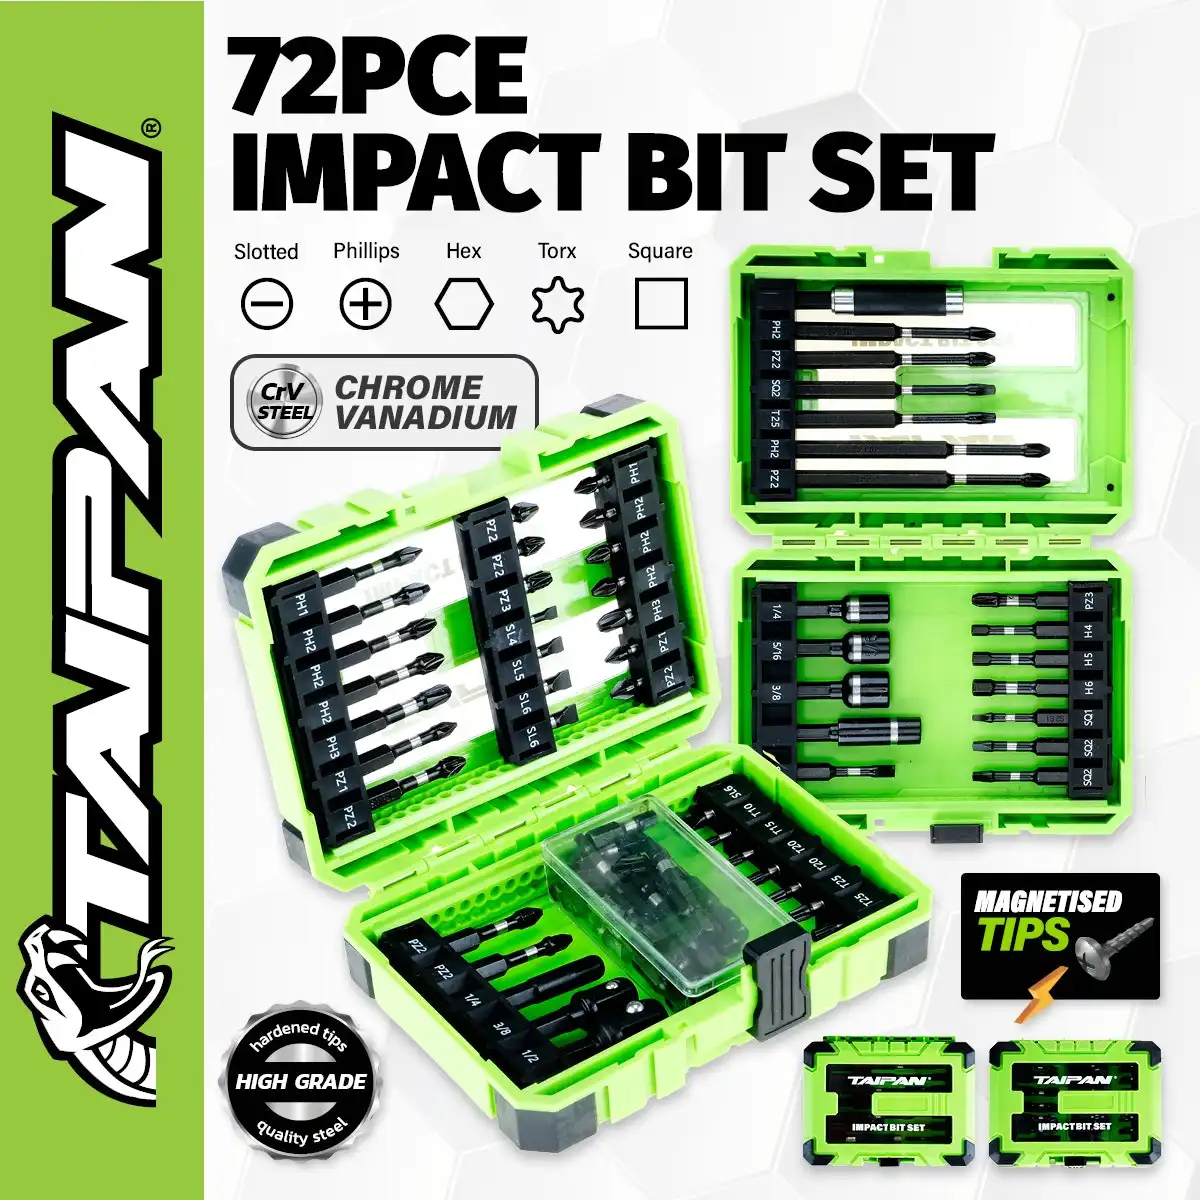 Taipan® 72PCE Impact Bit Set Magnetic Tips Various Heads Storage Case